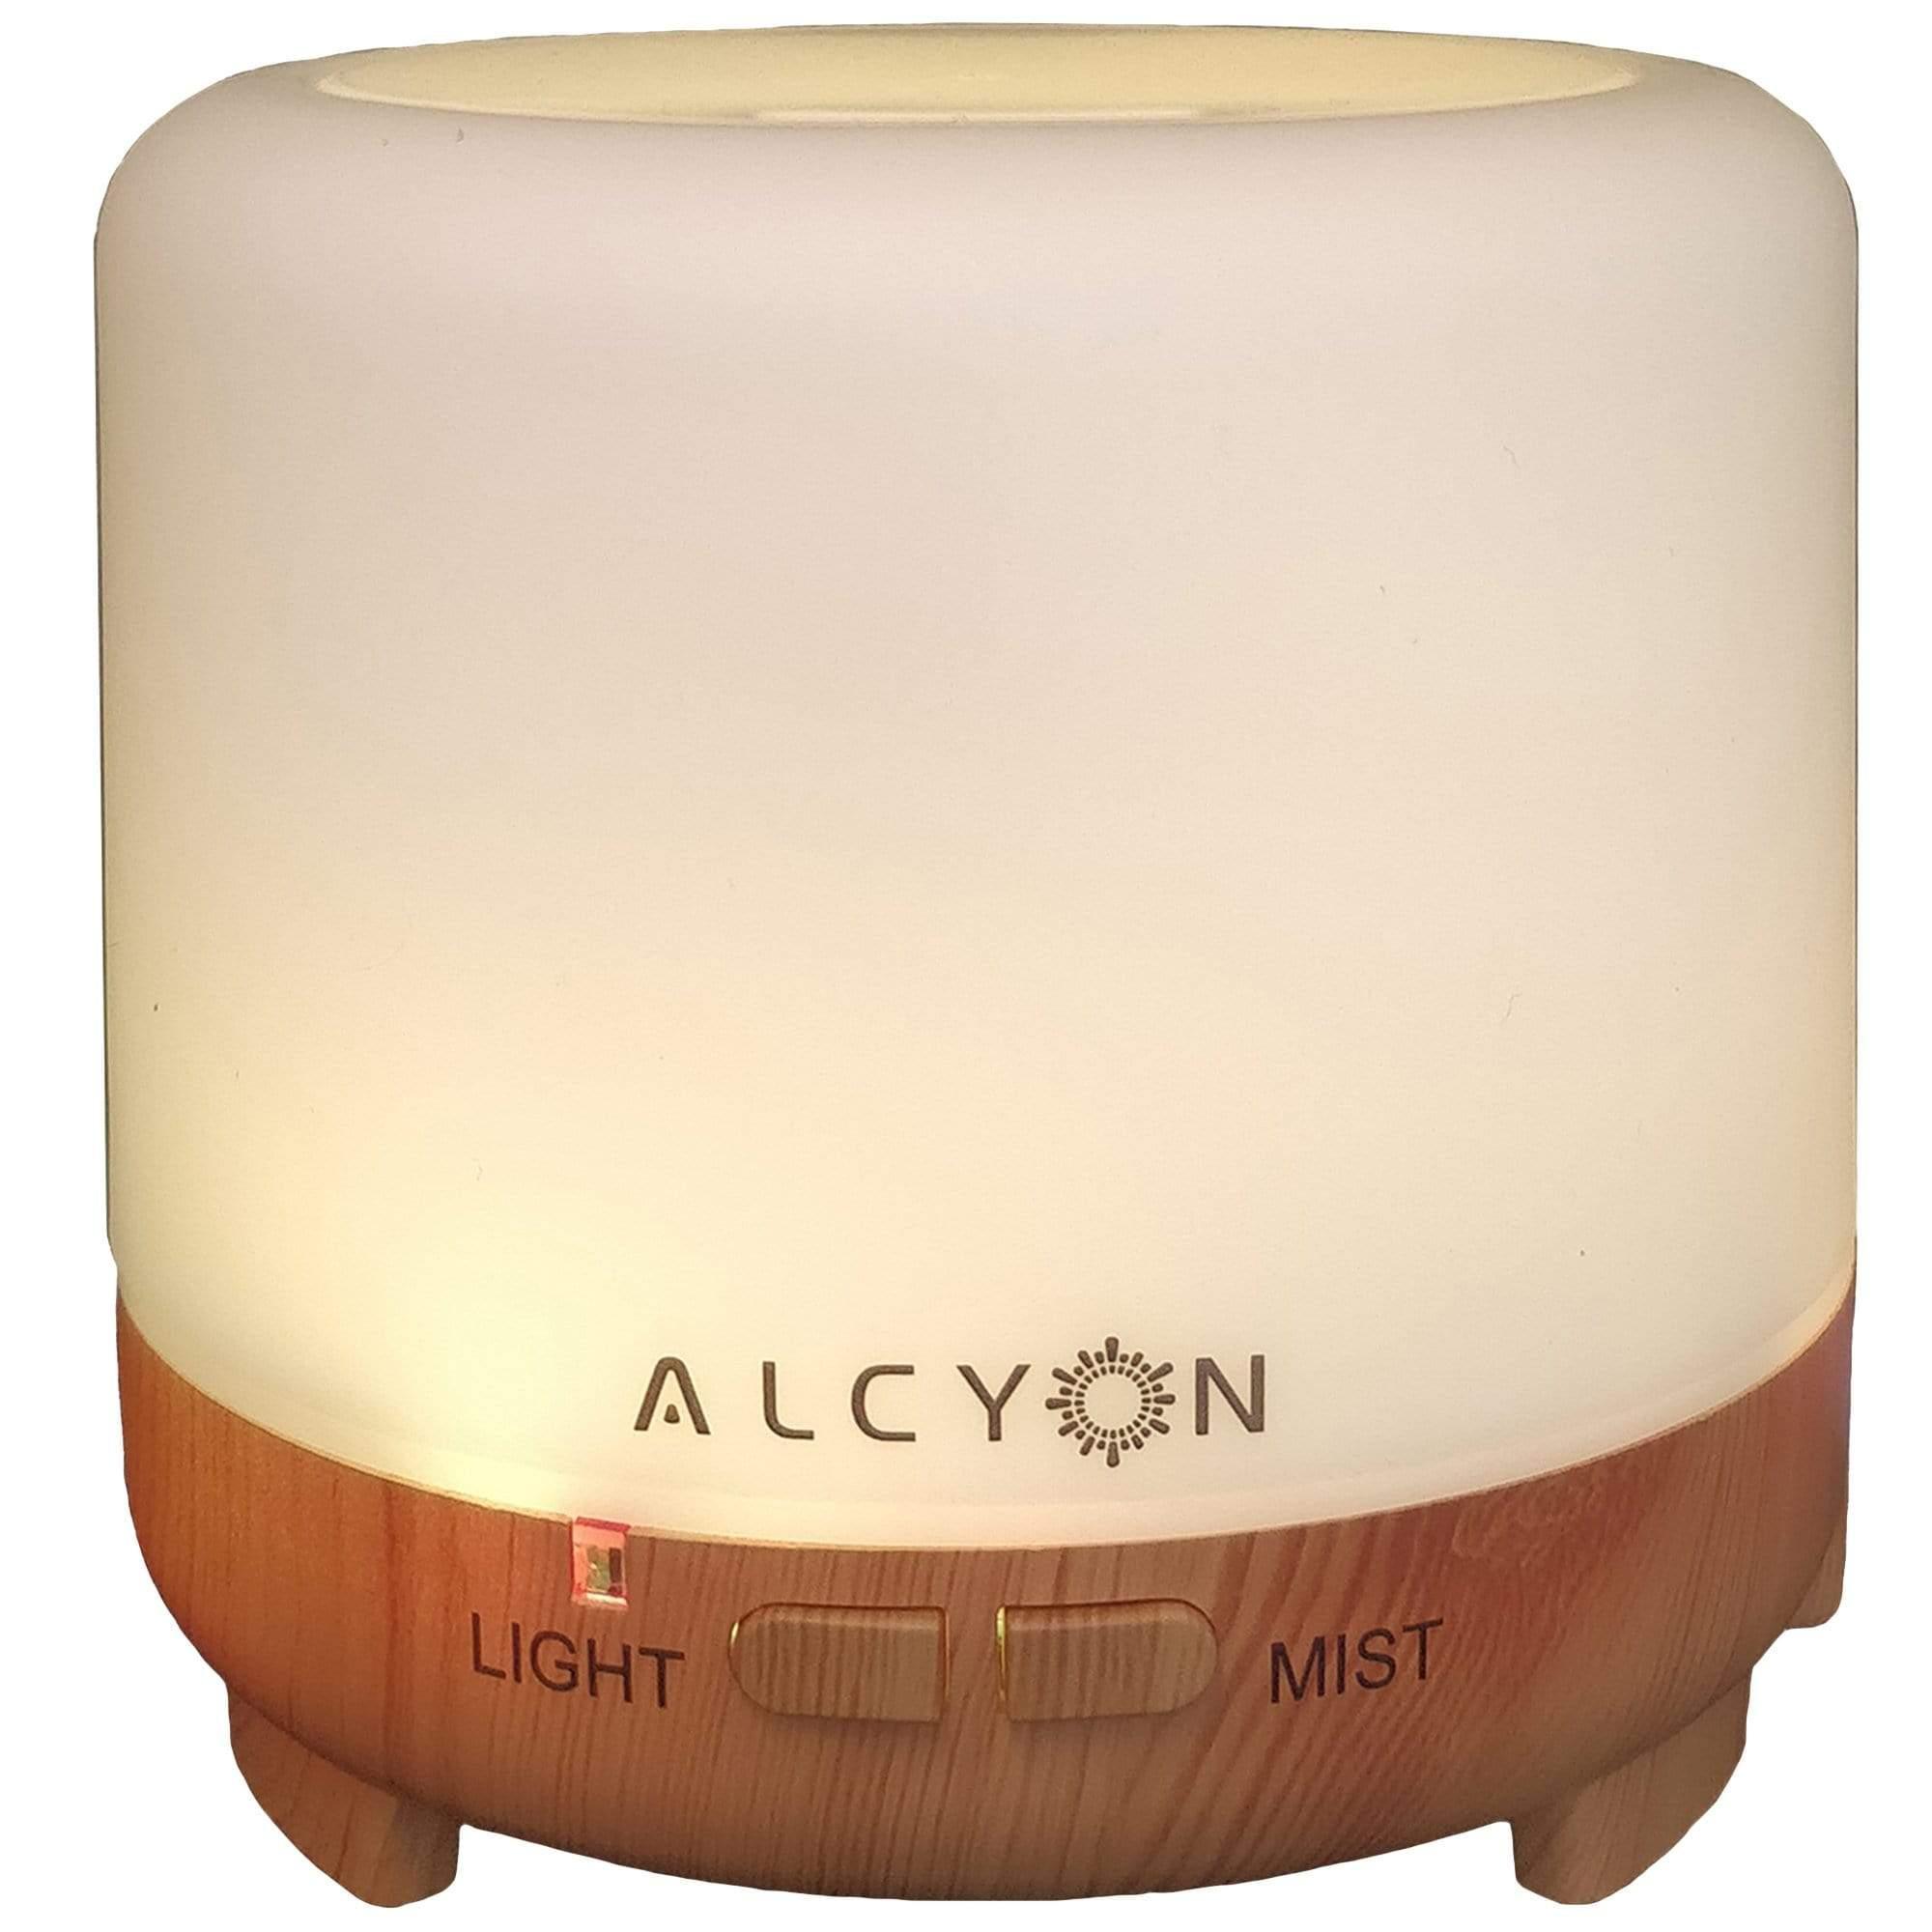 Alcyon Baby Miniko Aromatherapy Ultrasonic Diffuser